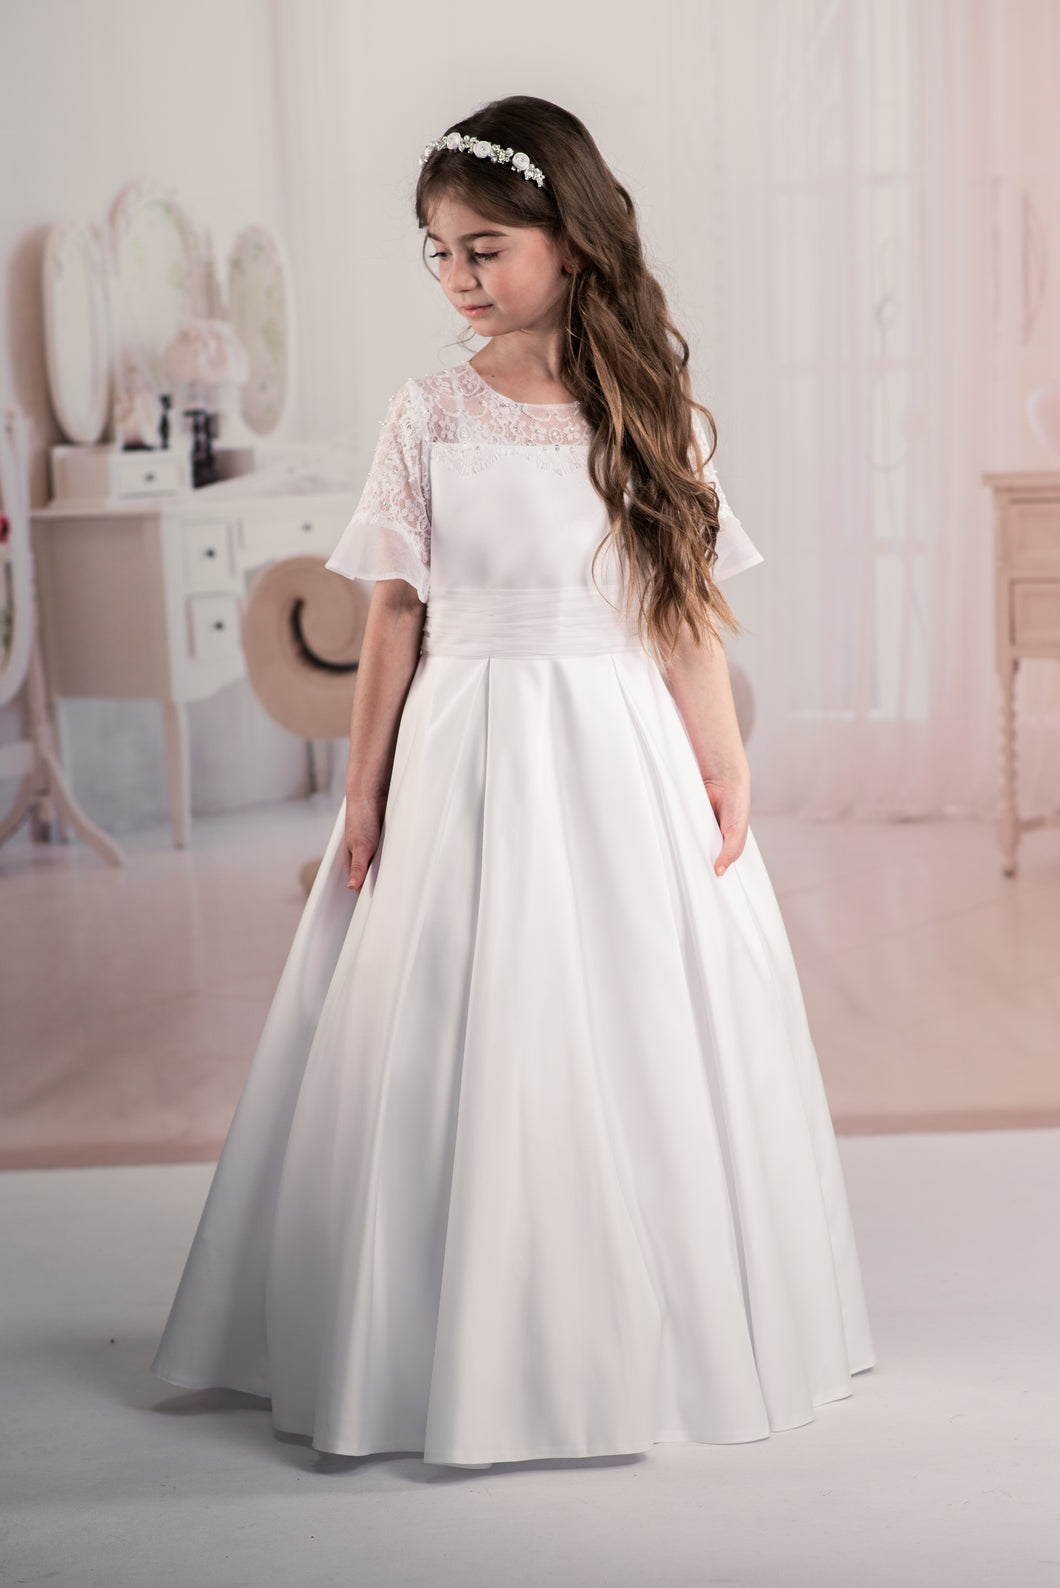 SALE COMMUNION DRESS Rosa Bella By Sweetie Pie Girls White Communion Dress:- RB635 AGE 7